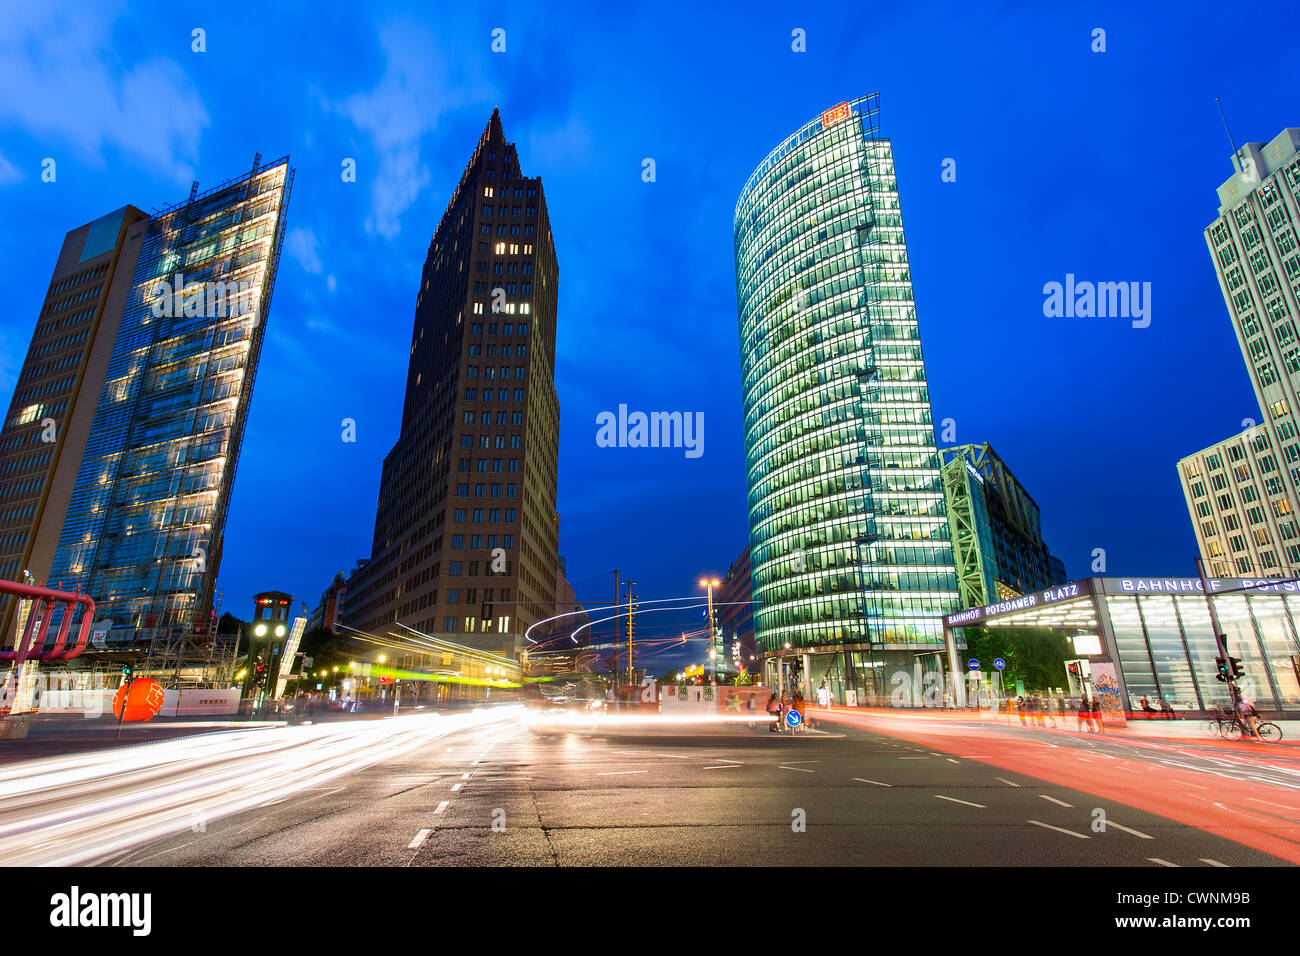 Europe, Germany, Berlin, Skyscrapers at Potsdamer Platz Stock Photo